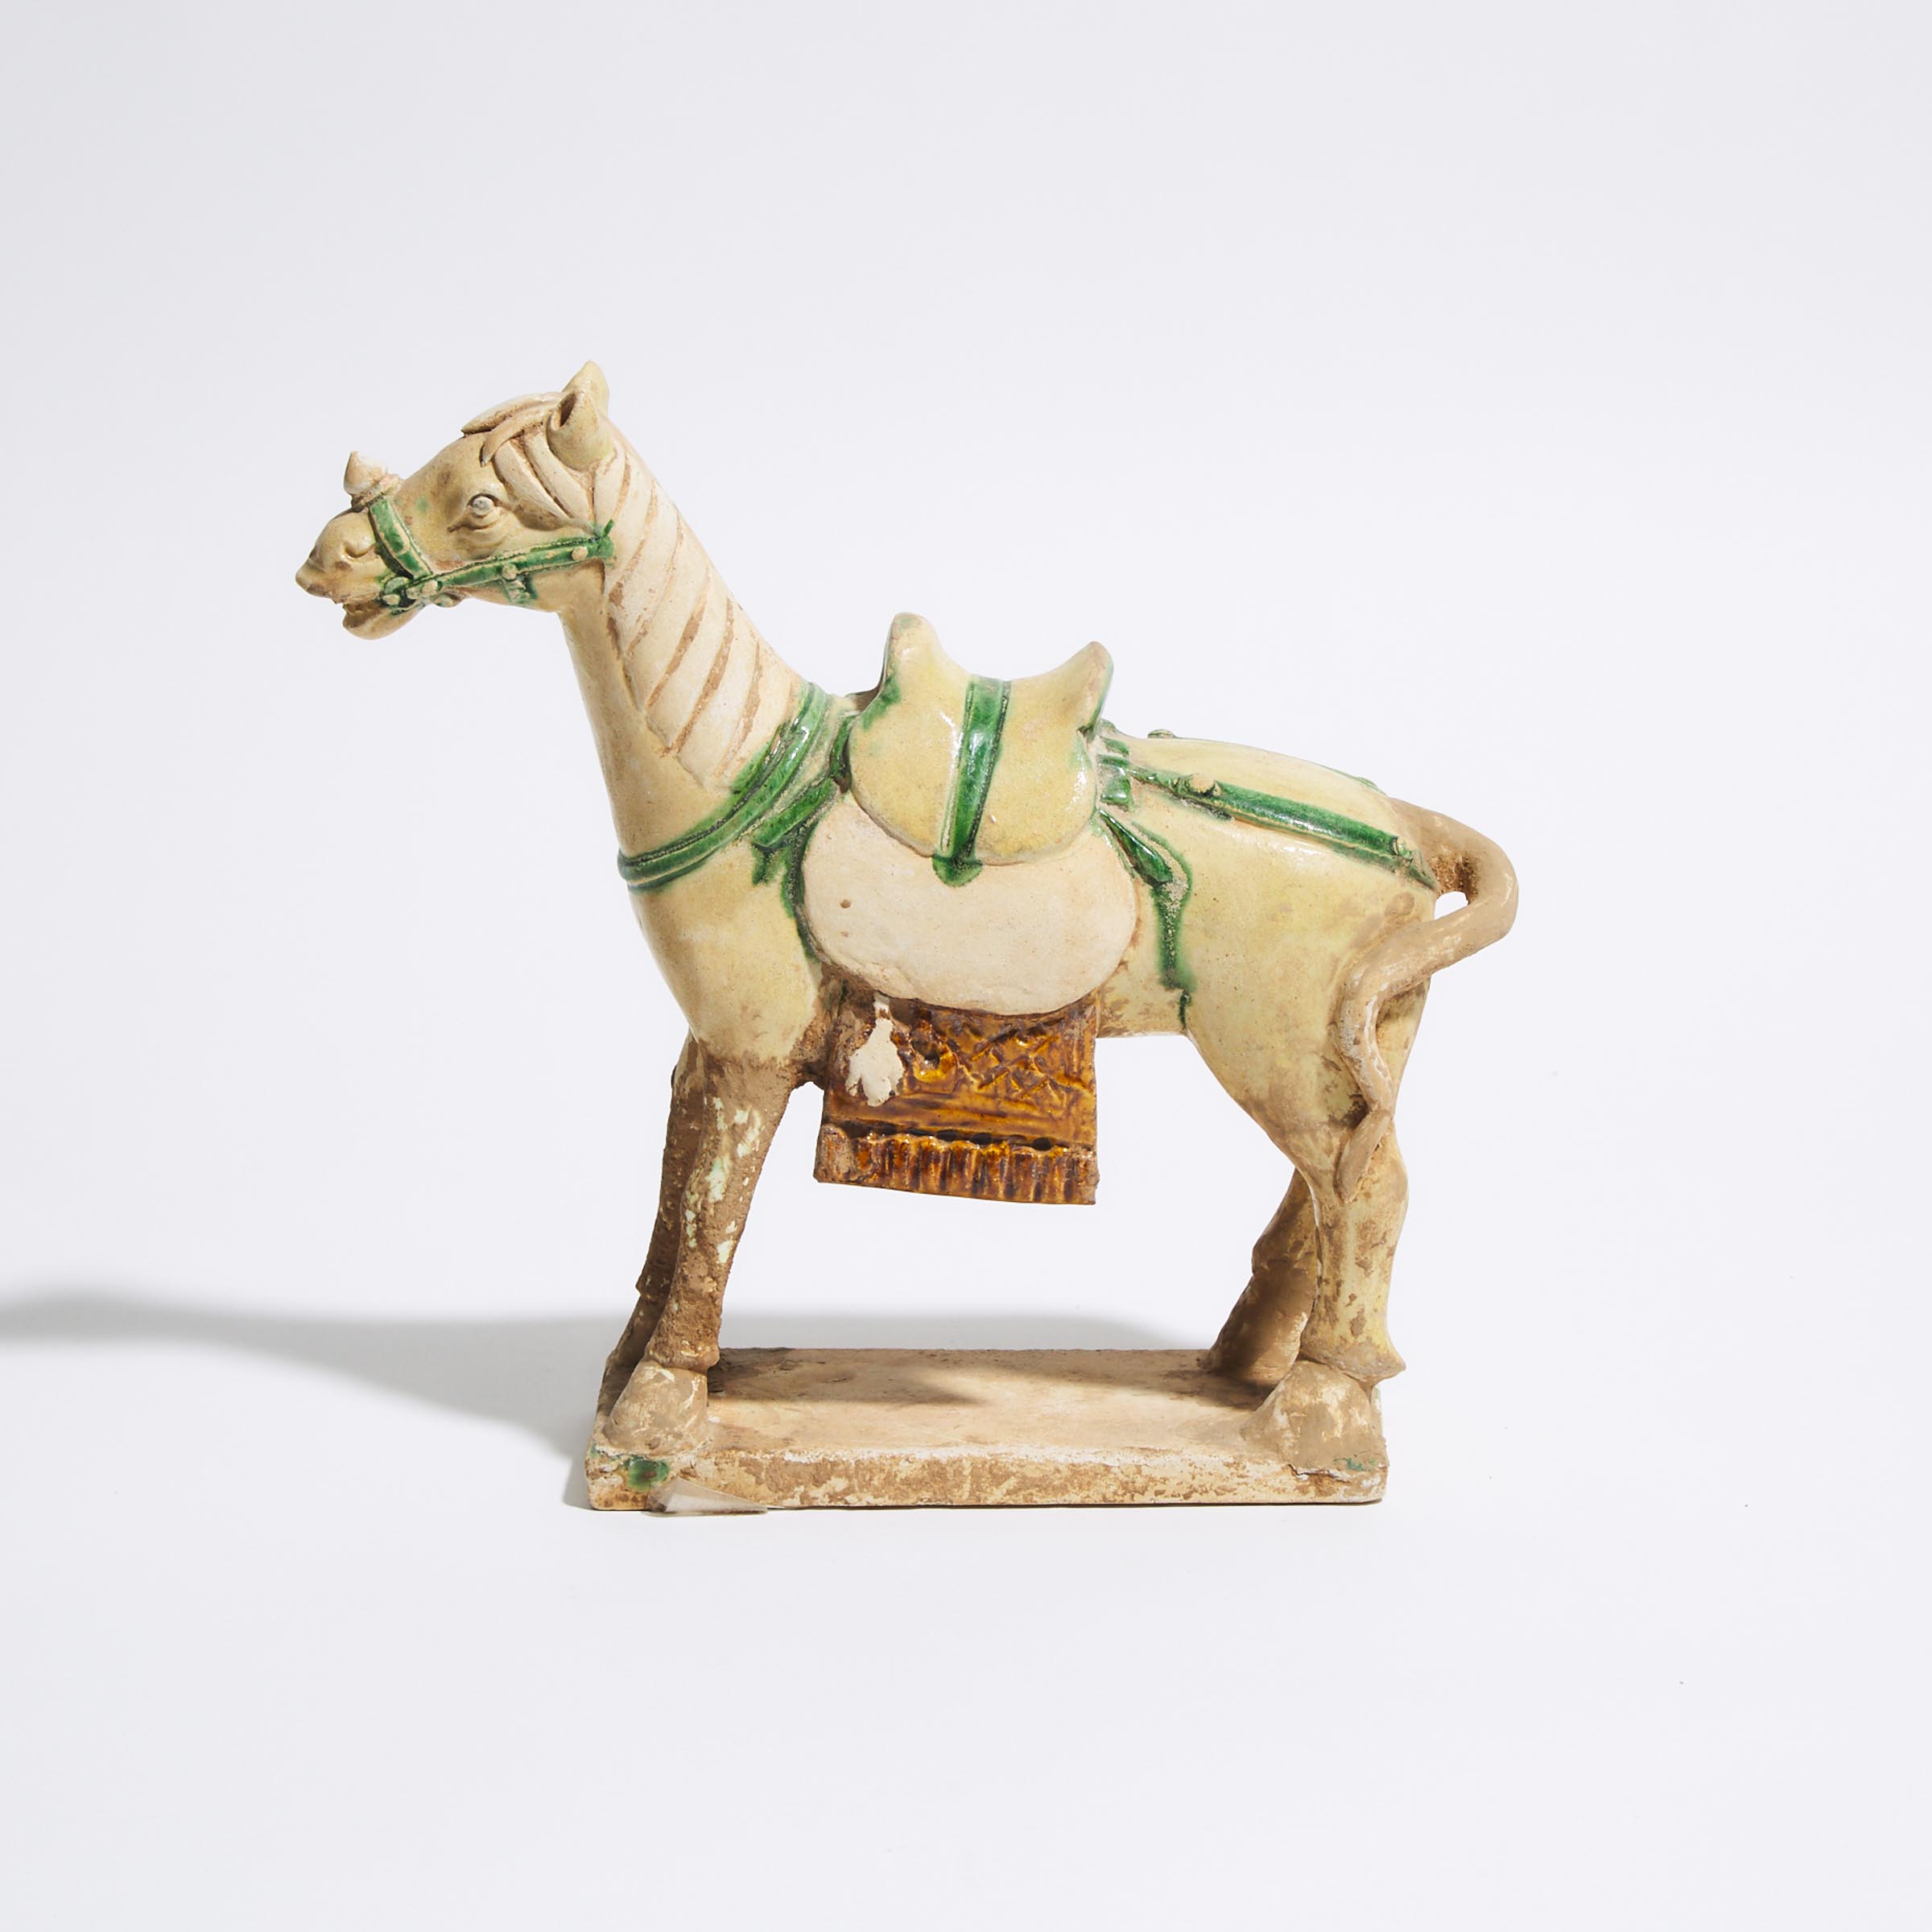 A Glazed Pottery Figure of a Horse, Ming Dynasty (1368-1644)